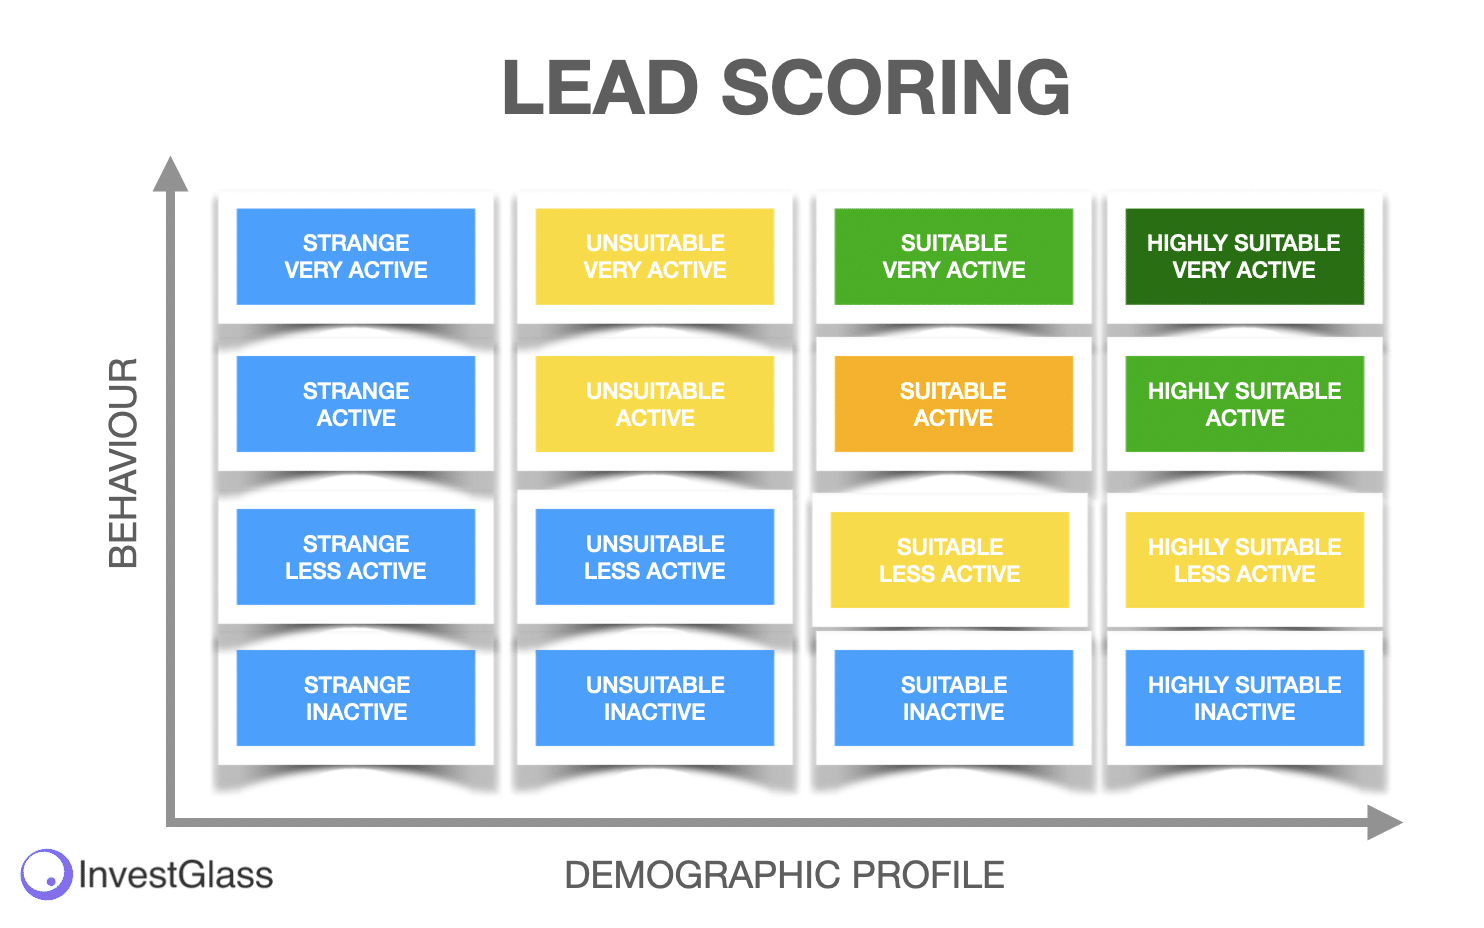 Lead Scoring Models